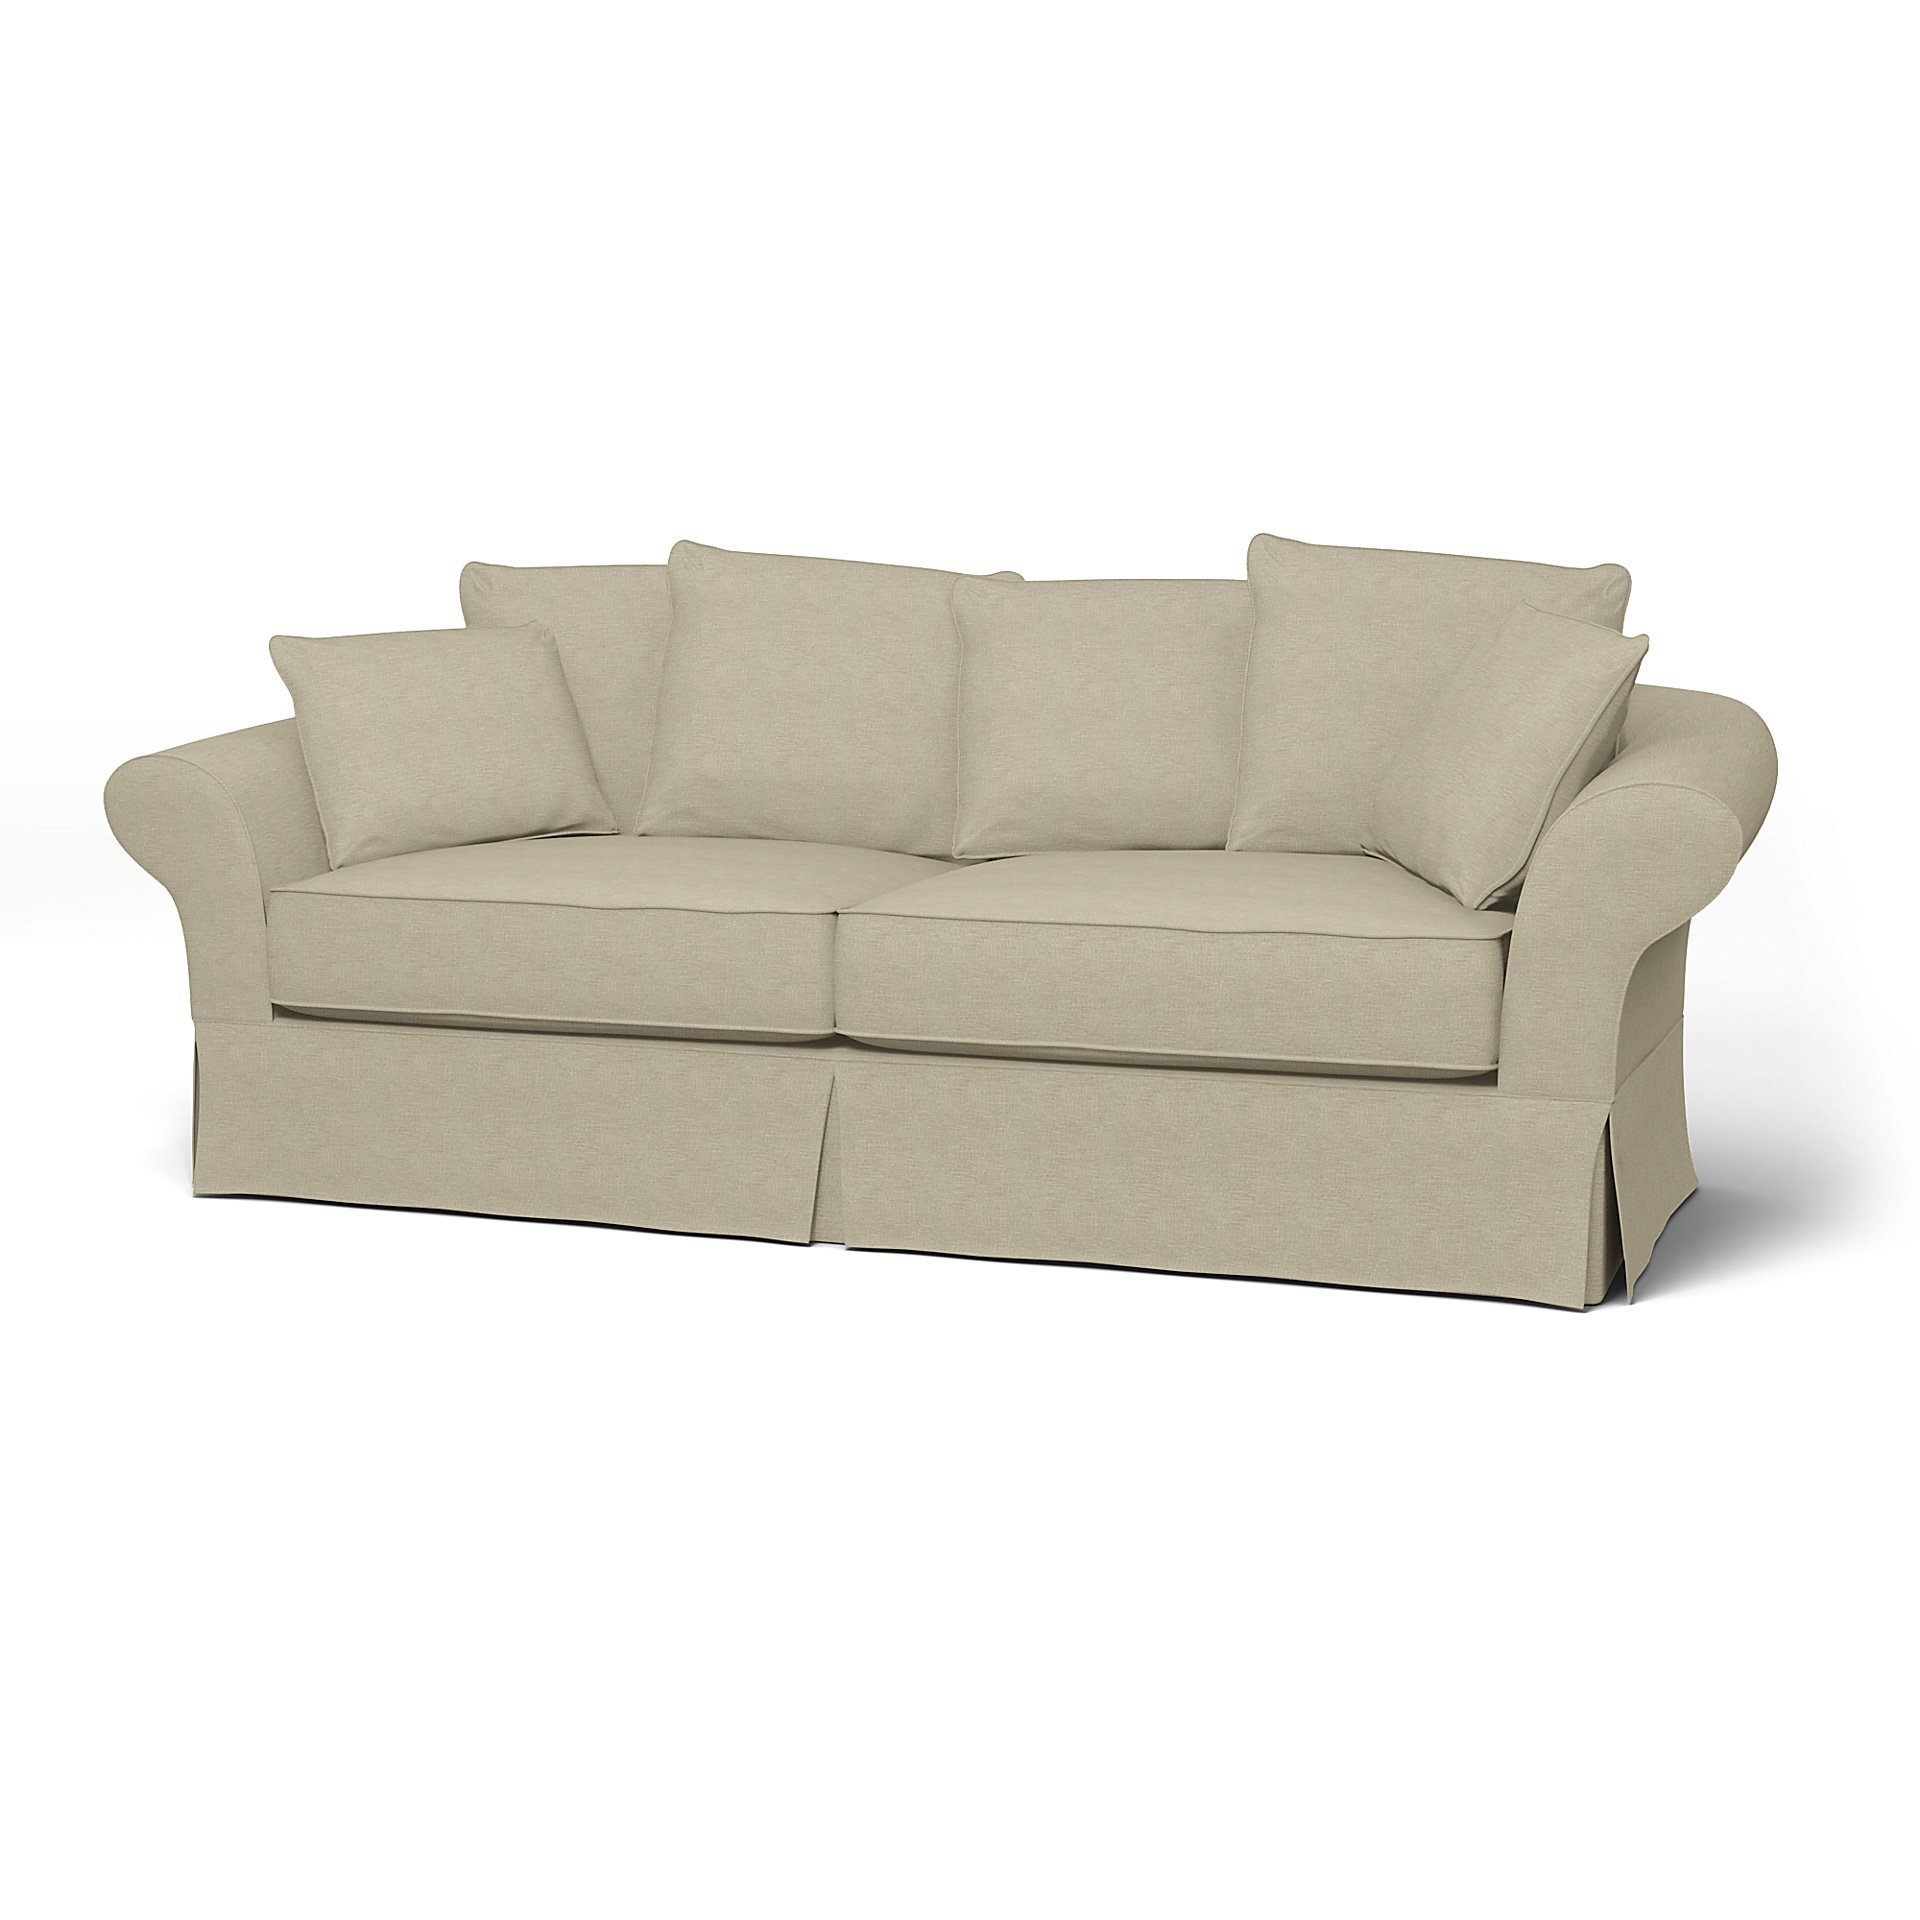 IKEA - Backamo 3 Seater Sofa Cover, Soft White, Boucle & Texture - Bemz